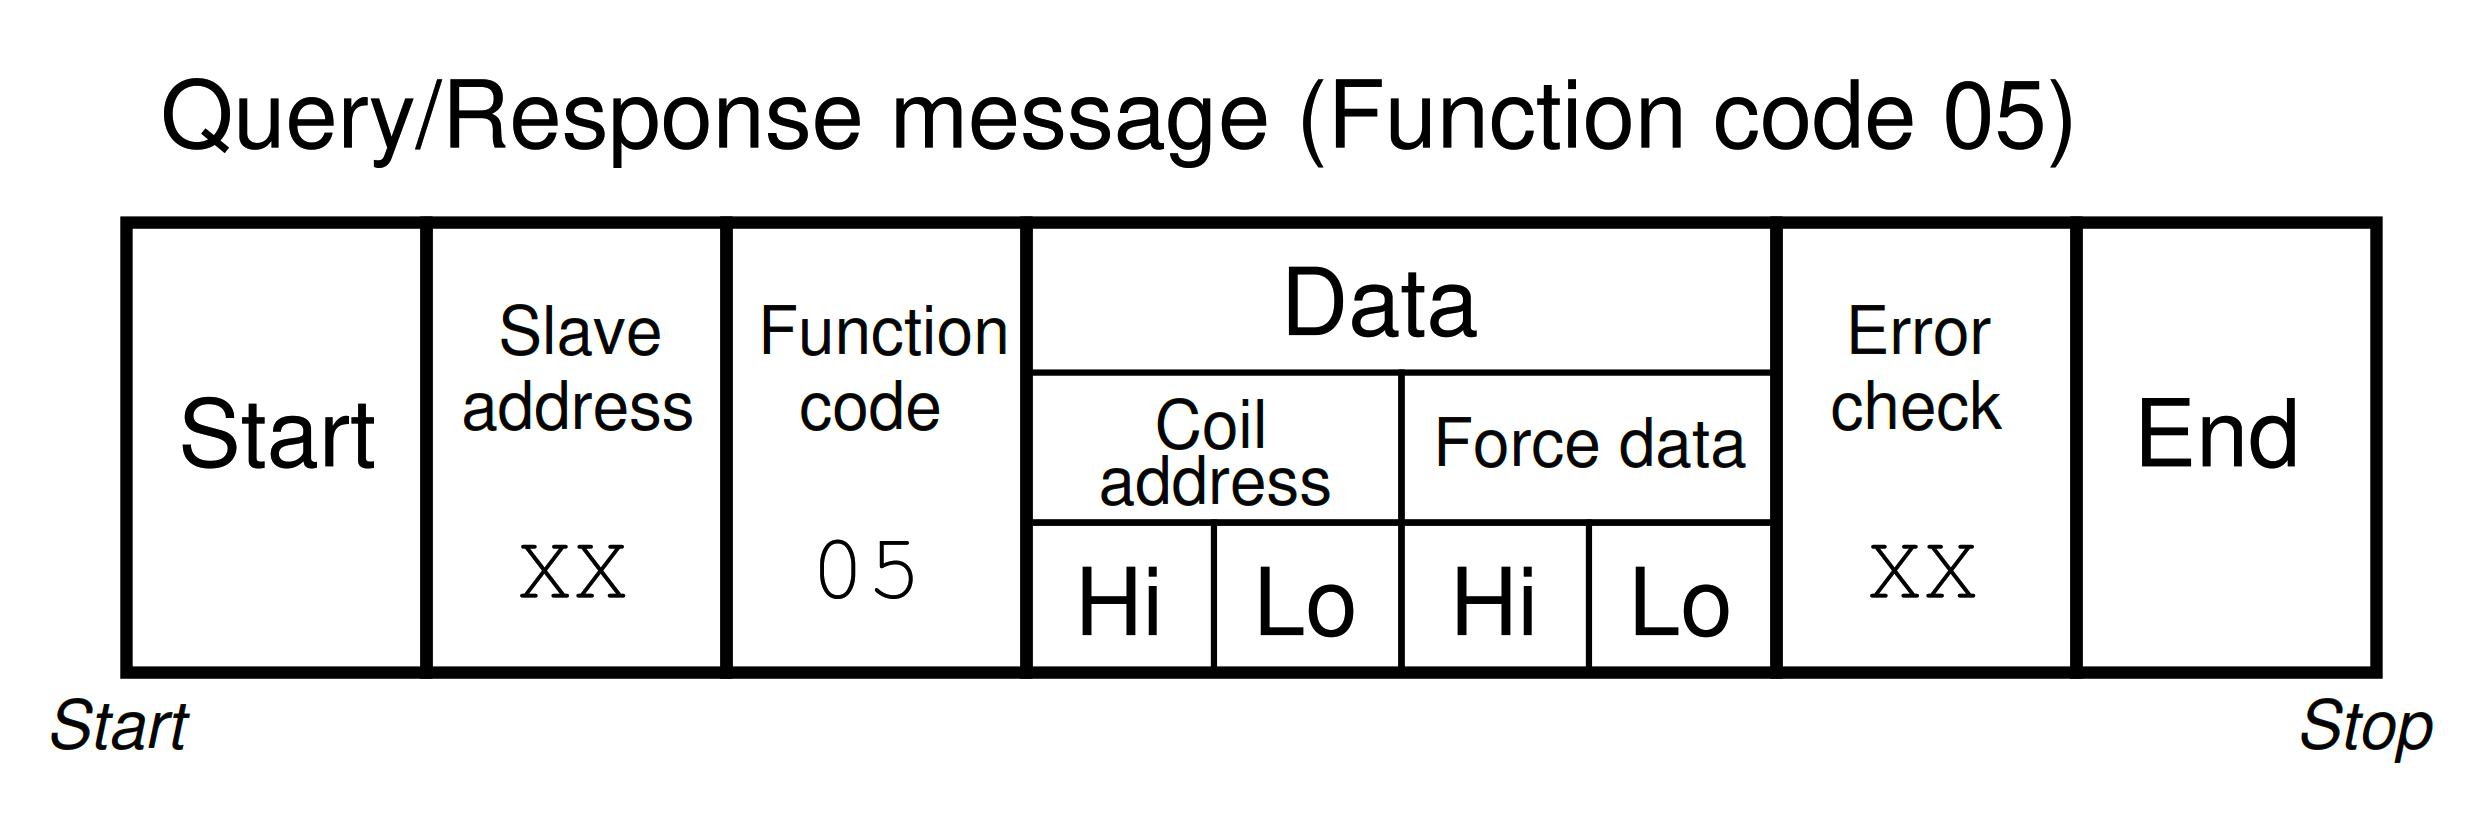 Modbus Function code 05 – Single Coil